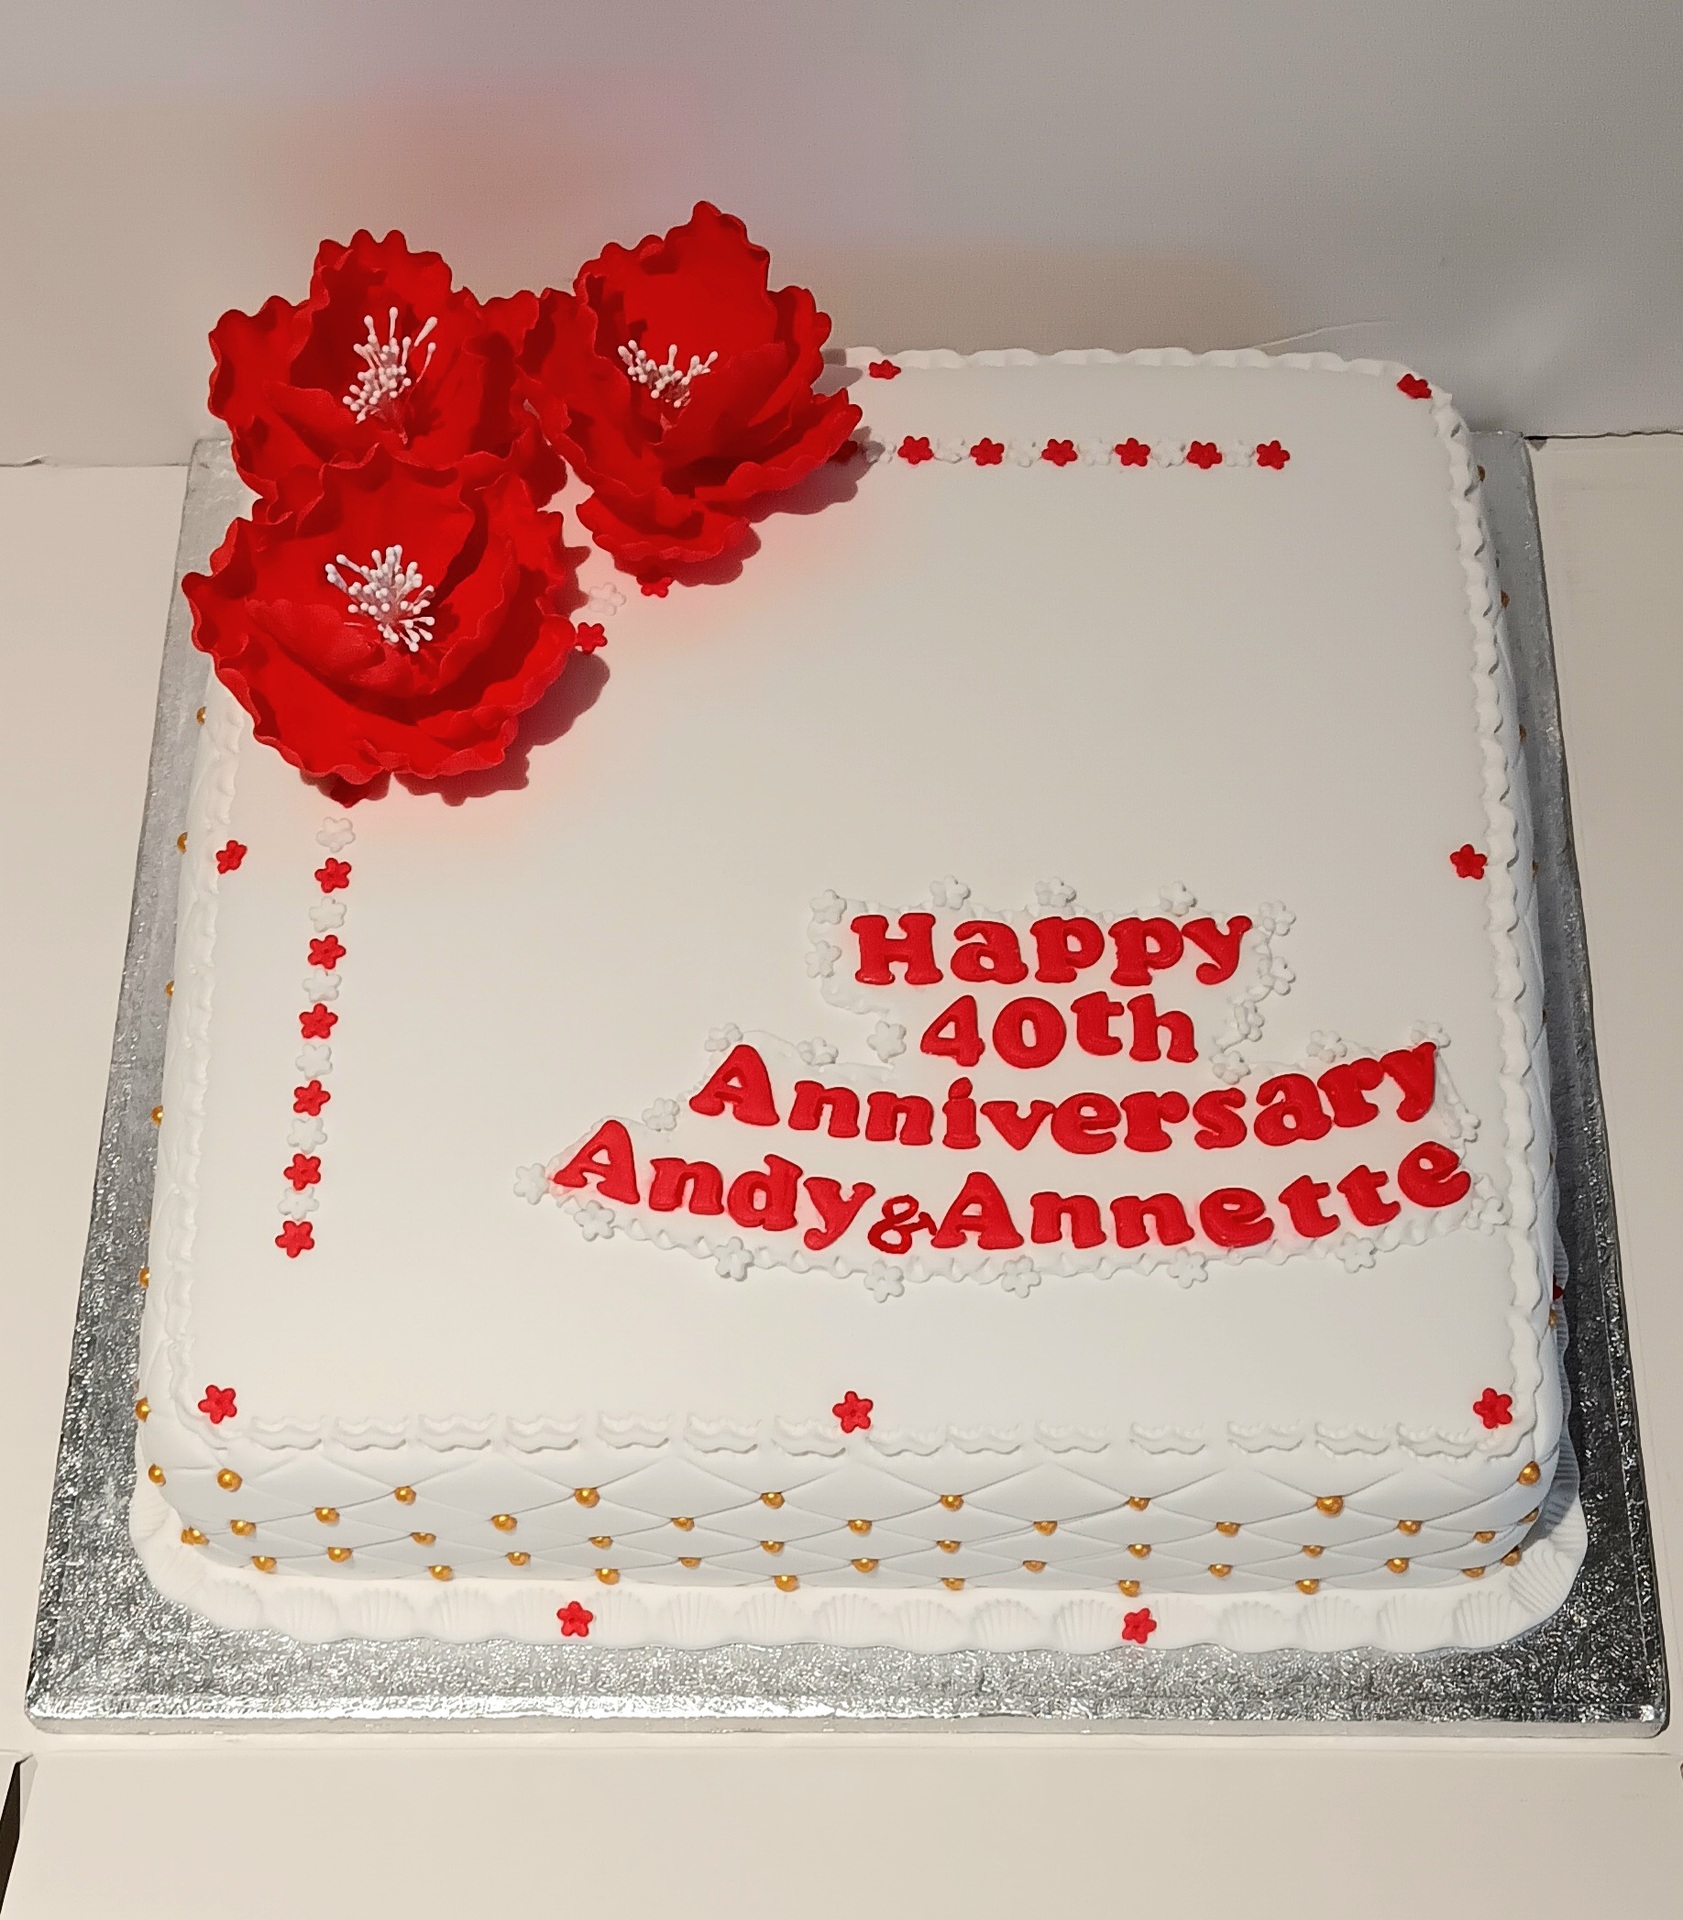 40th wedding anniversary cake with red sugar peonies